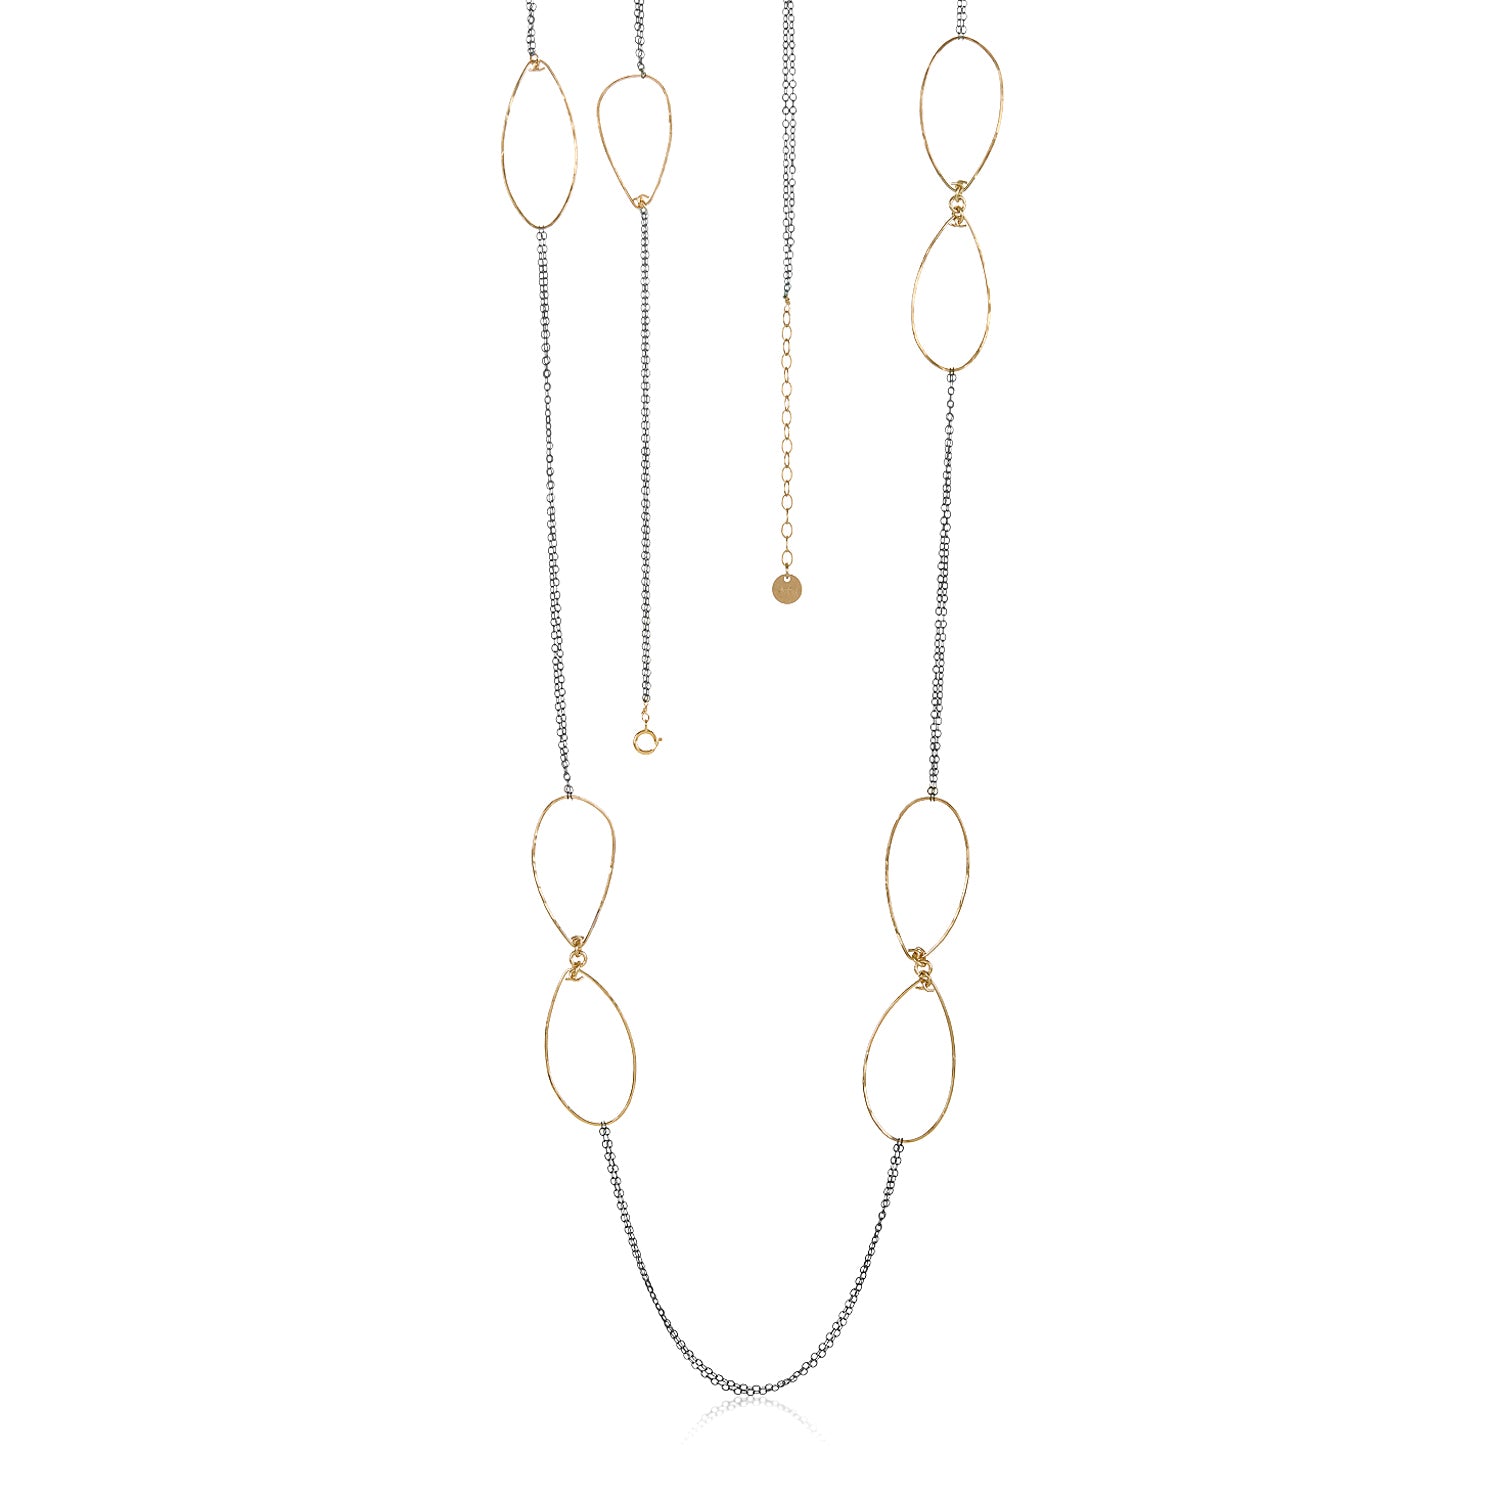 Golden Links Necklace